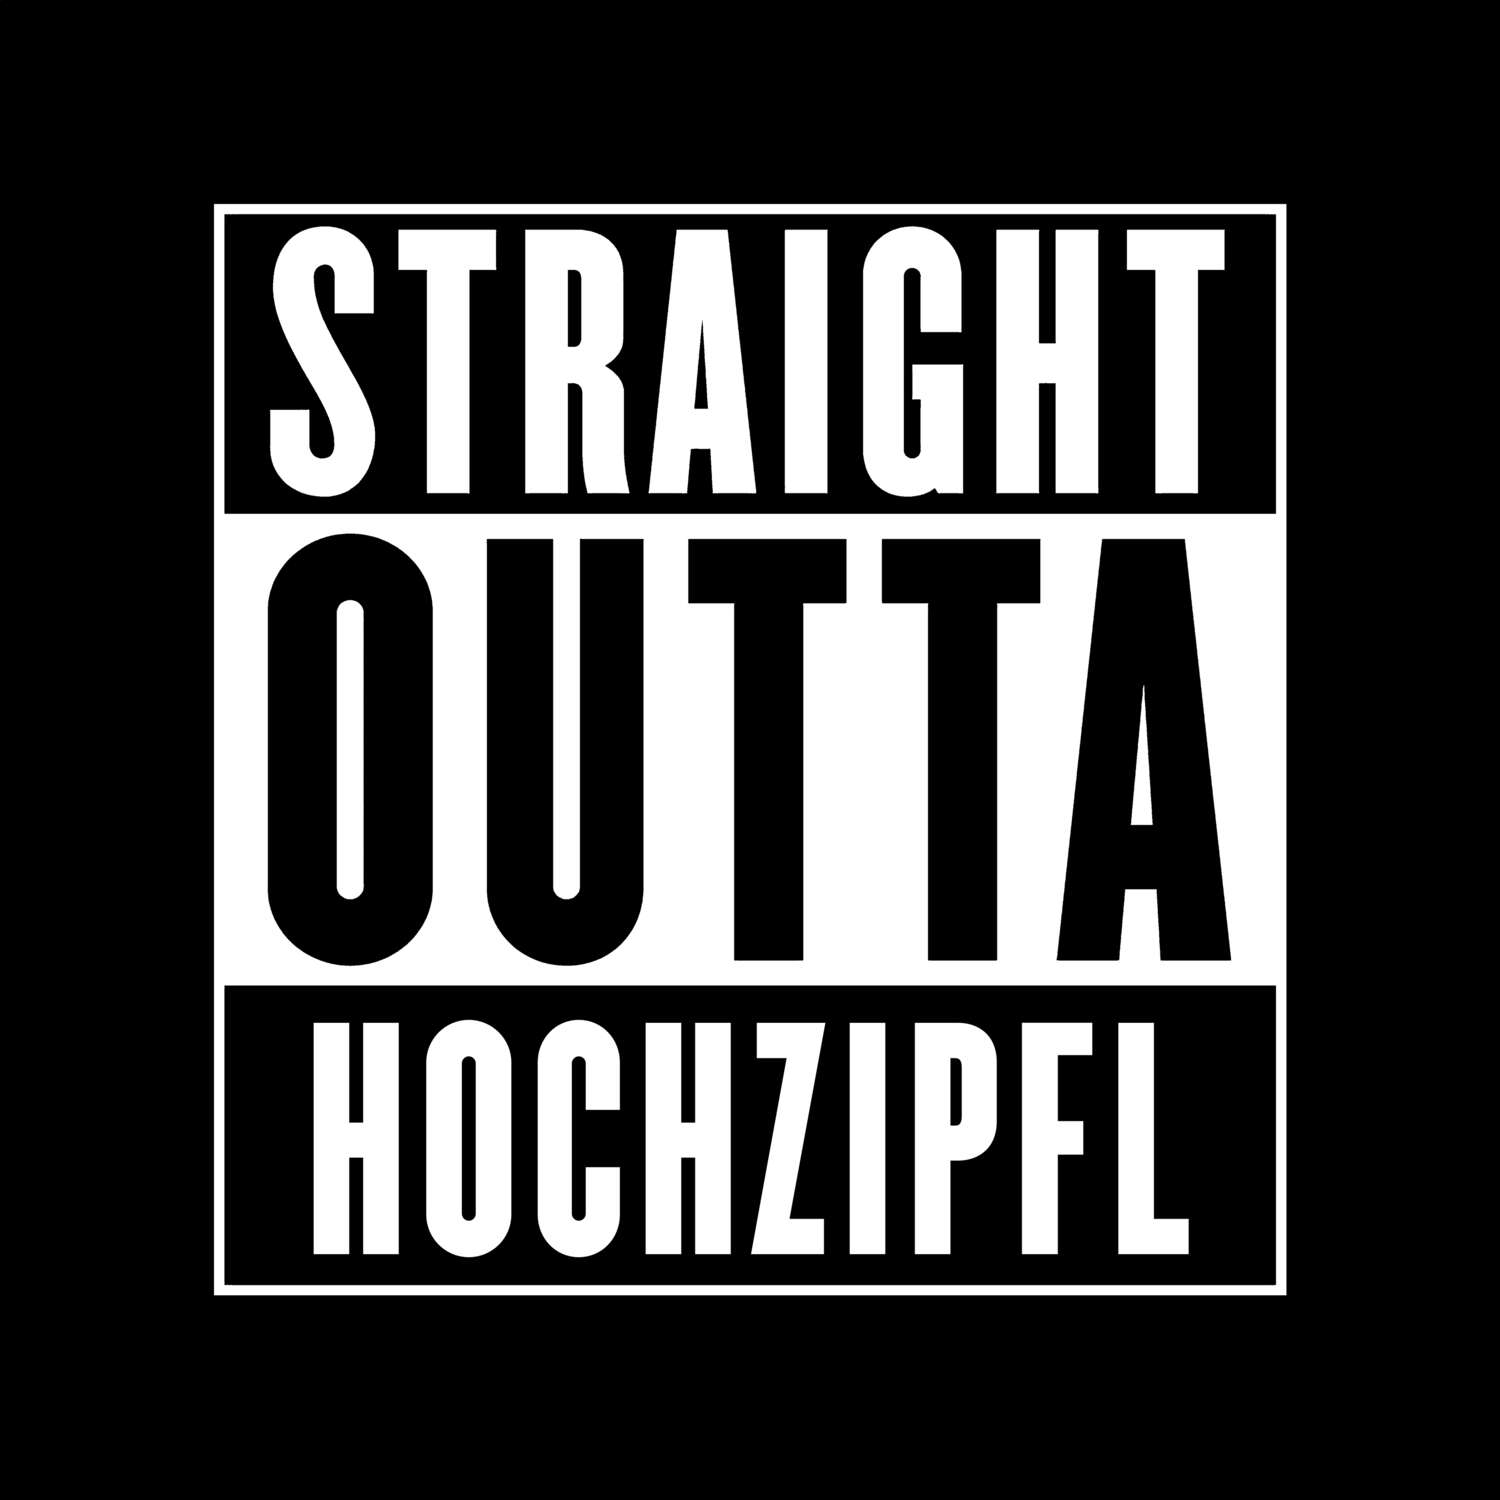 Hochzipfl T-Shirt »Straight Outta«